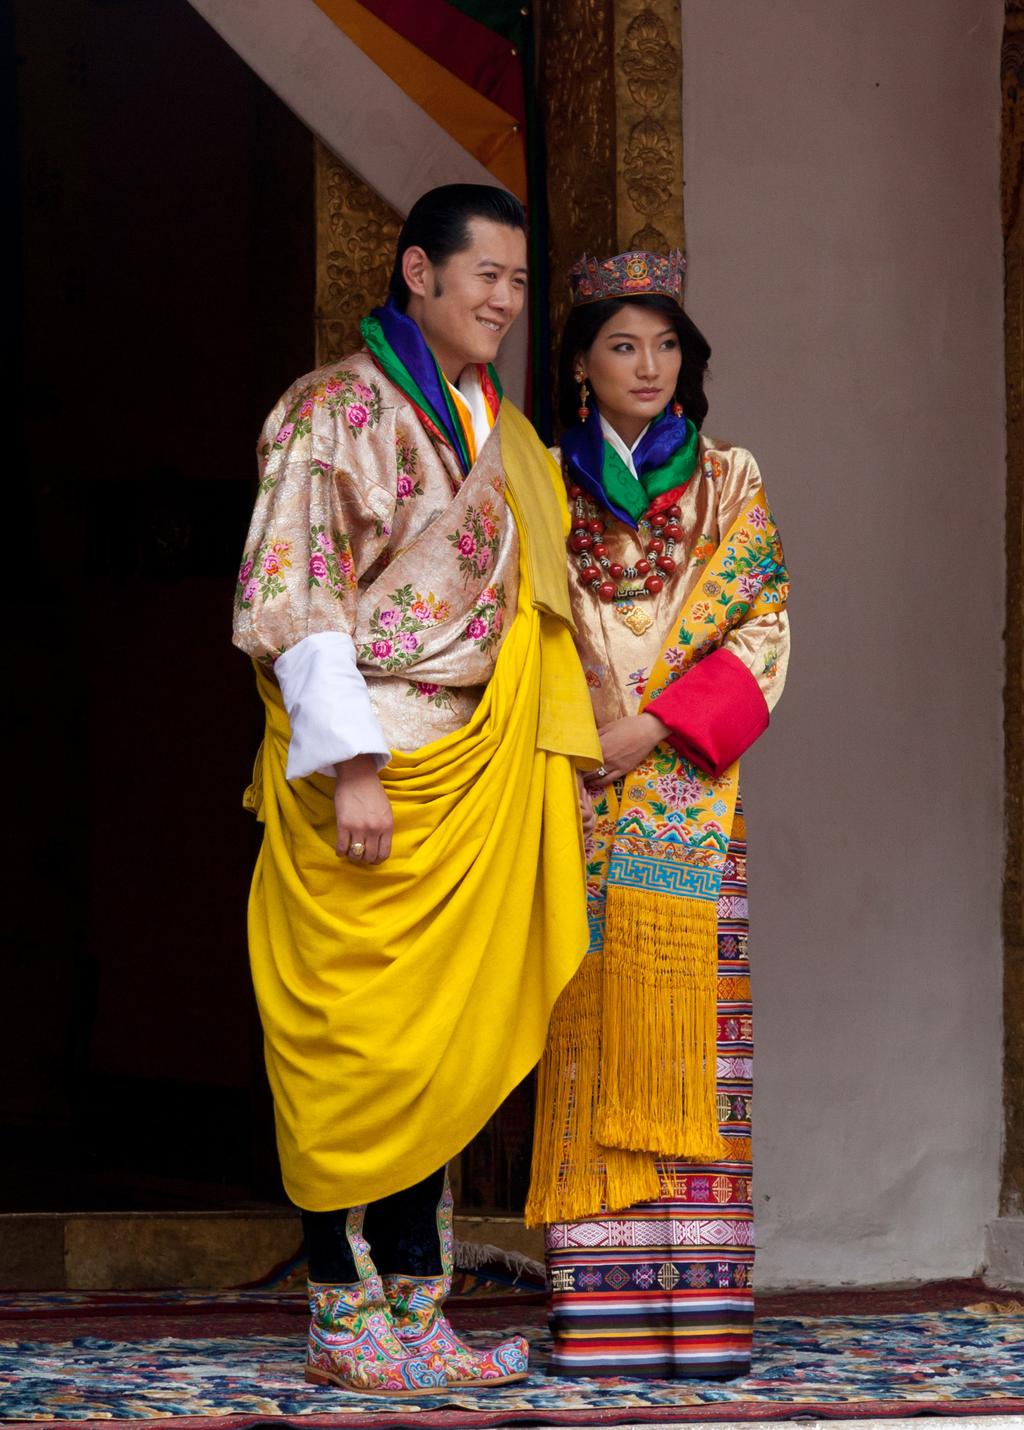 His Majesty the King, Jigme Khesar Namgyel Wangchuck